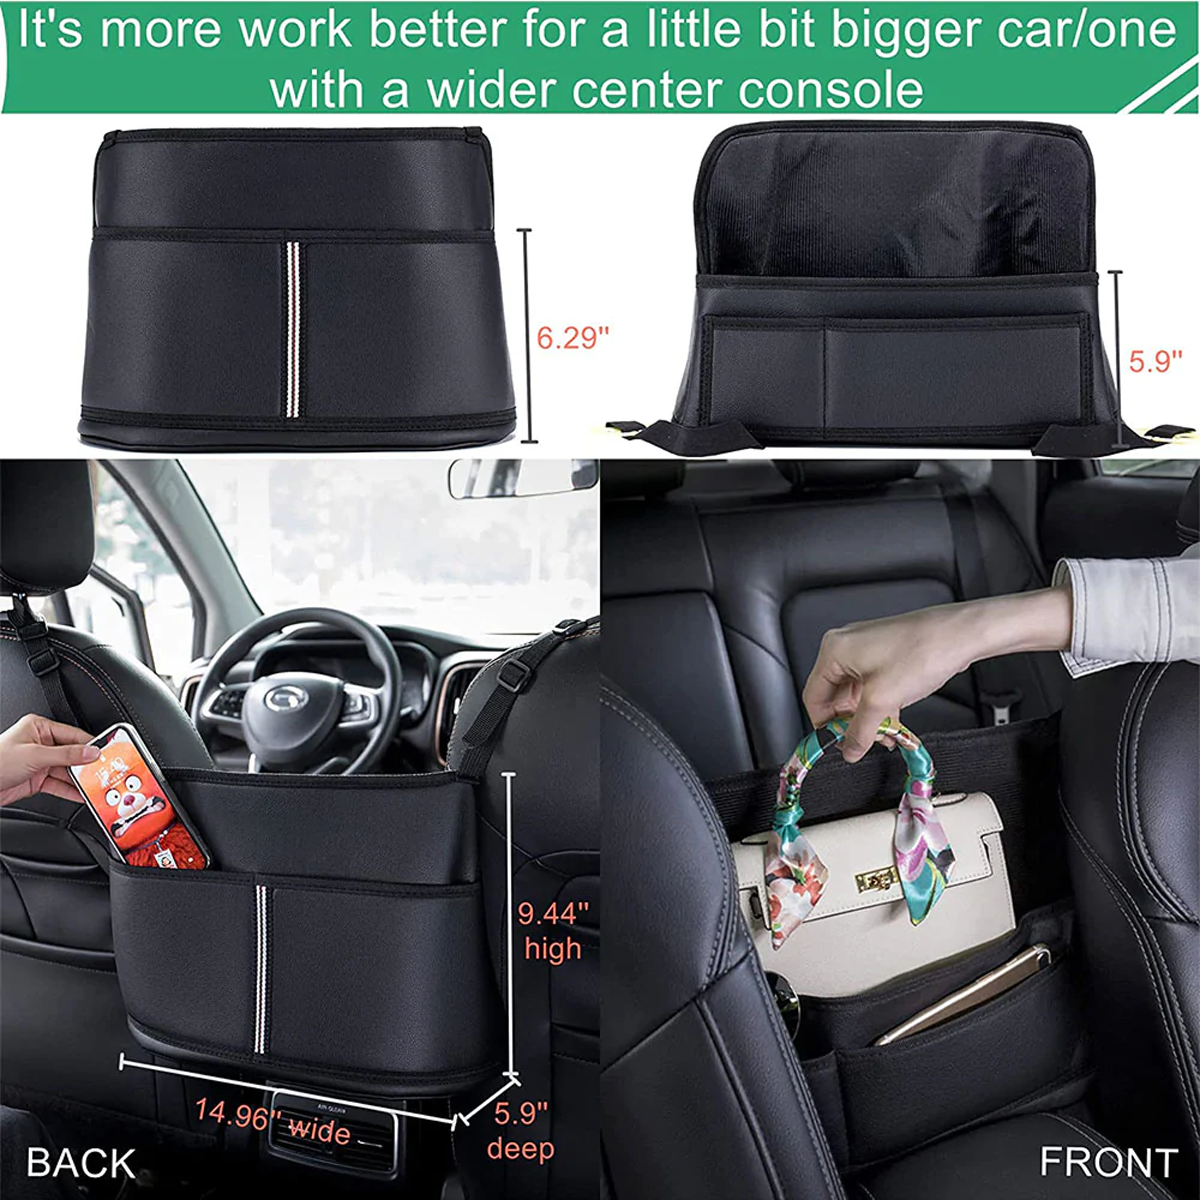 Car Purse Holder for Car Handbag Holder Between Seats Premium PU Leather, Custom Fit For Car, Hanging Car Purse Storage Pocket Back Seat Pet Barrier DLFT223